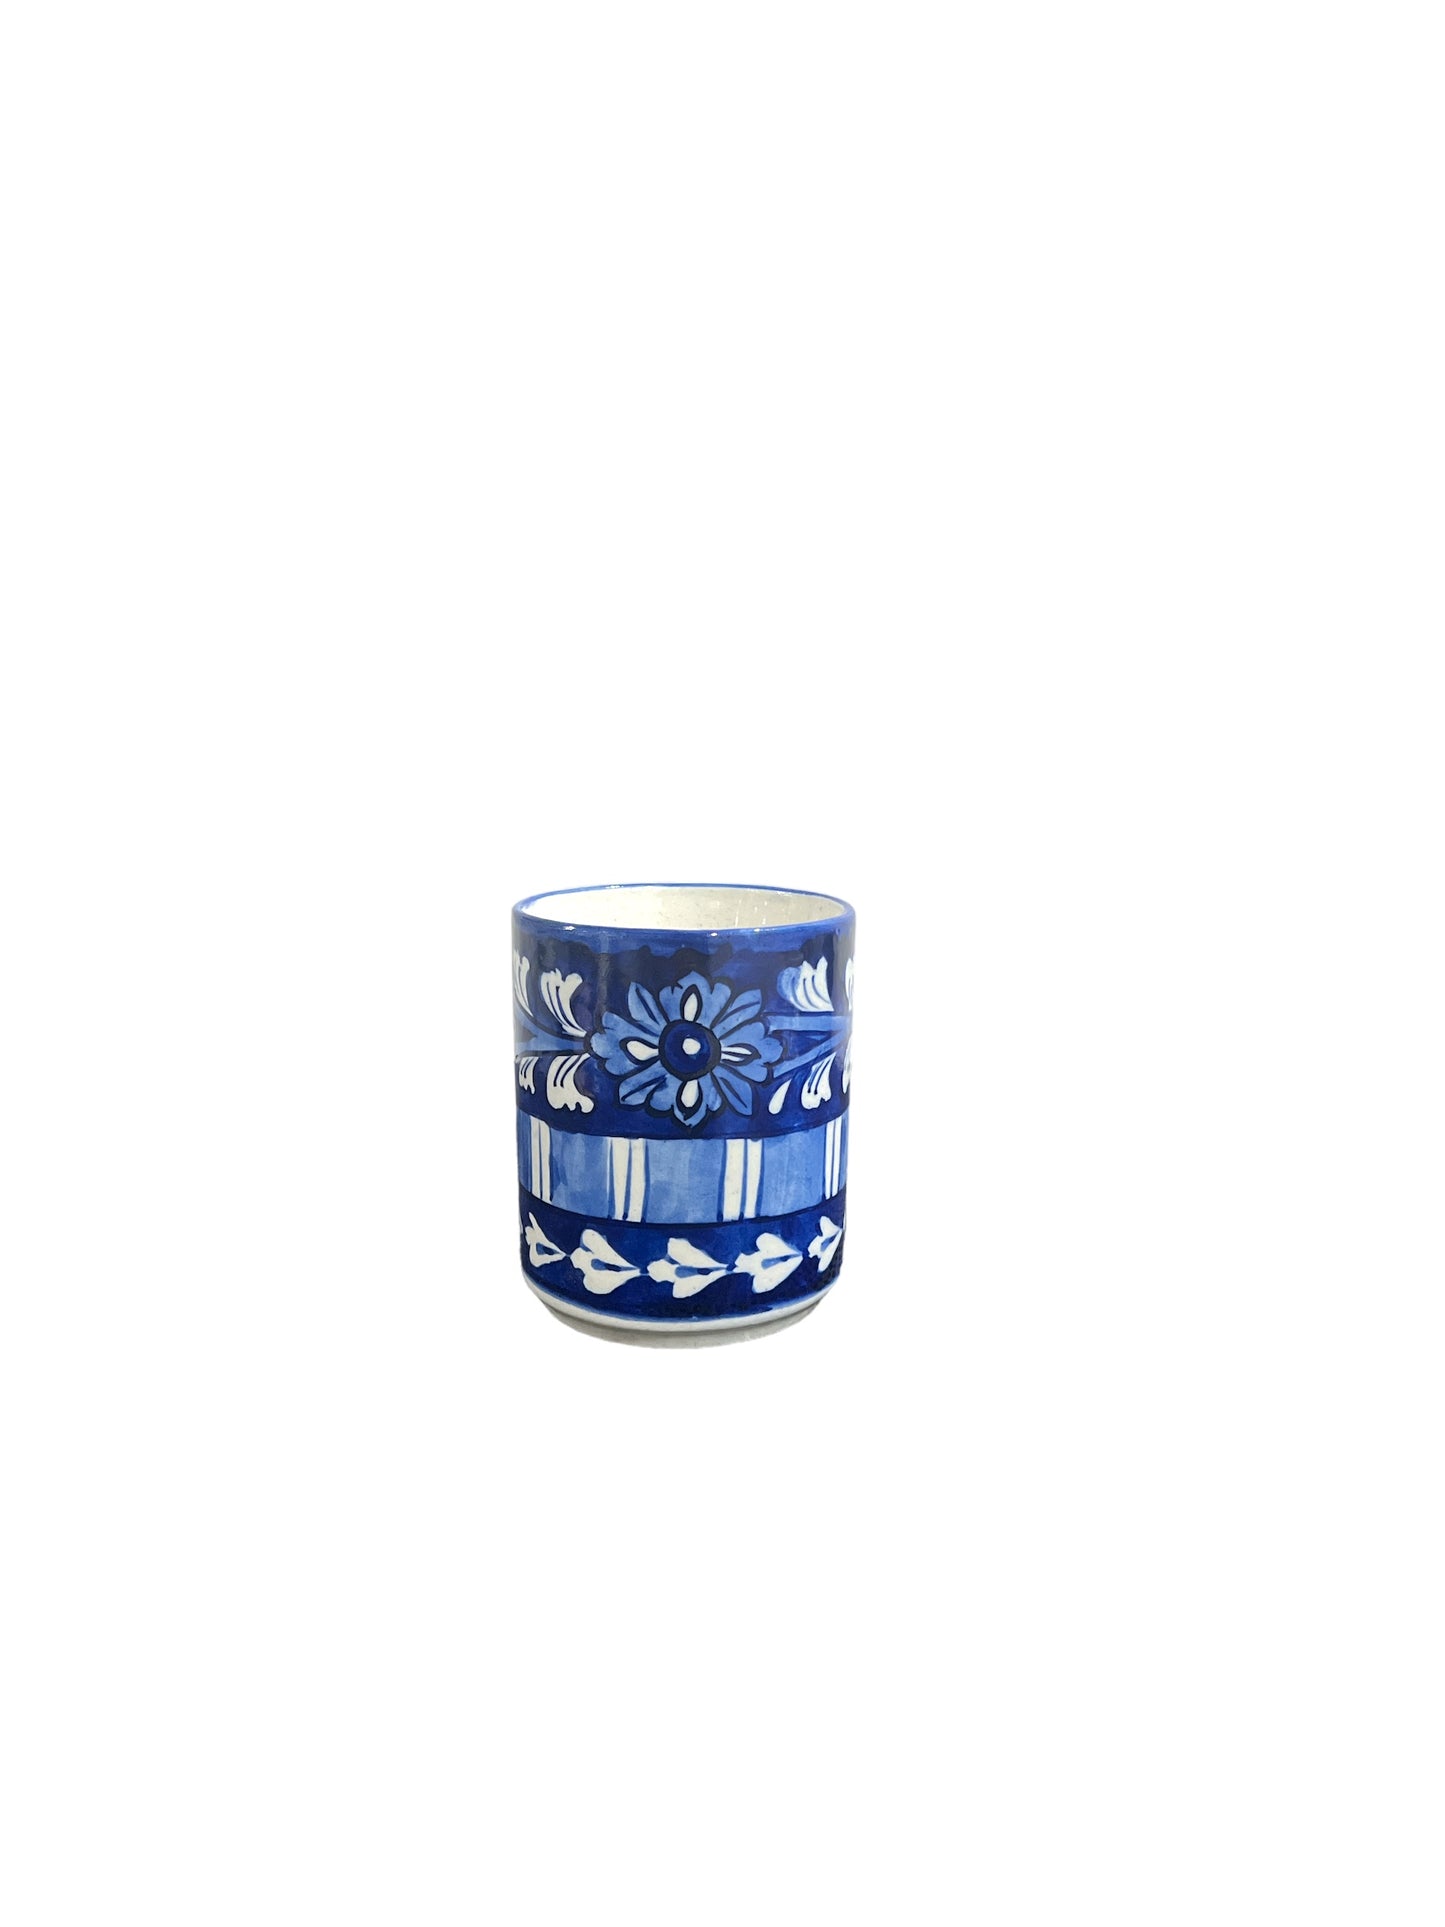 Blue Pottery Tea Coffee Mug - Flowers and Stripes Design (Set of 2)